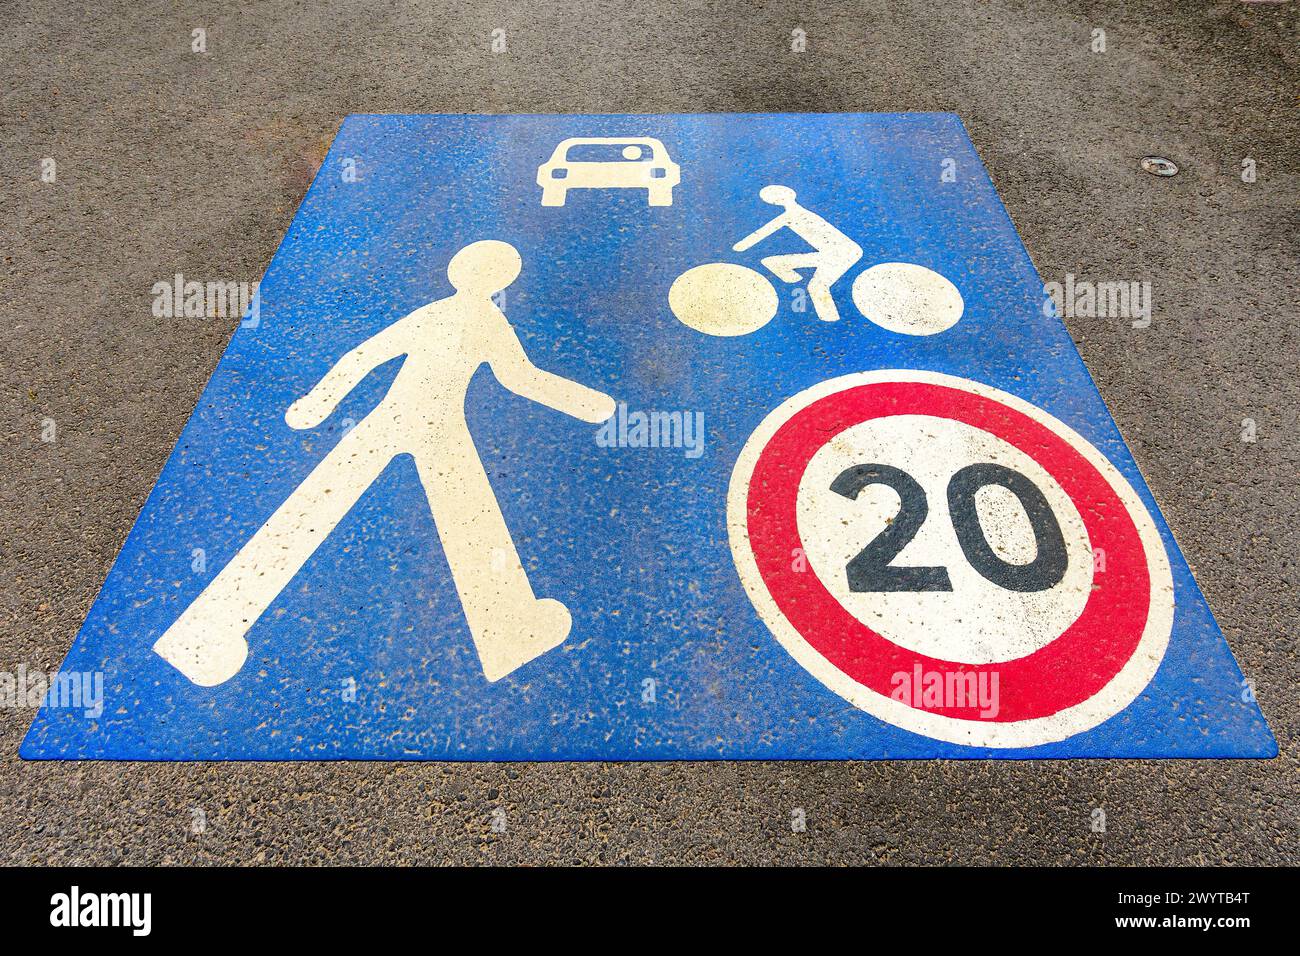 Confusing road markings - Saint-Savin, Vienne (86), France. Stock Photo